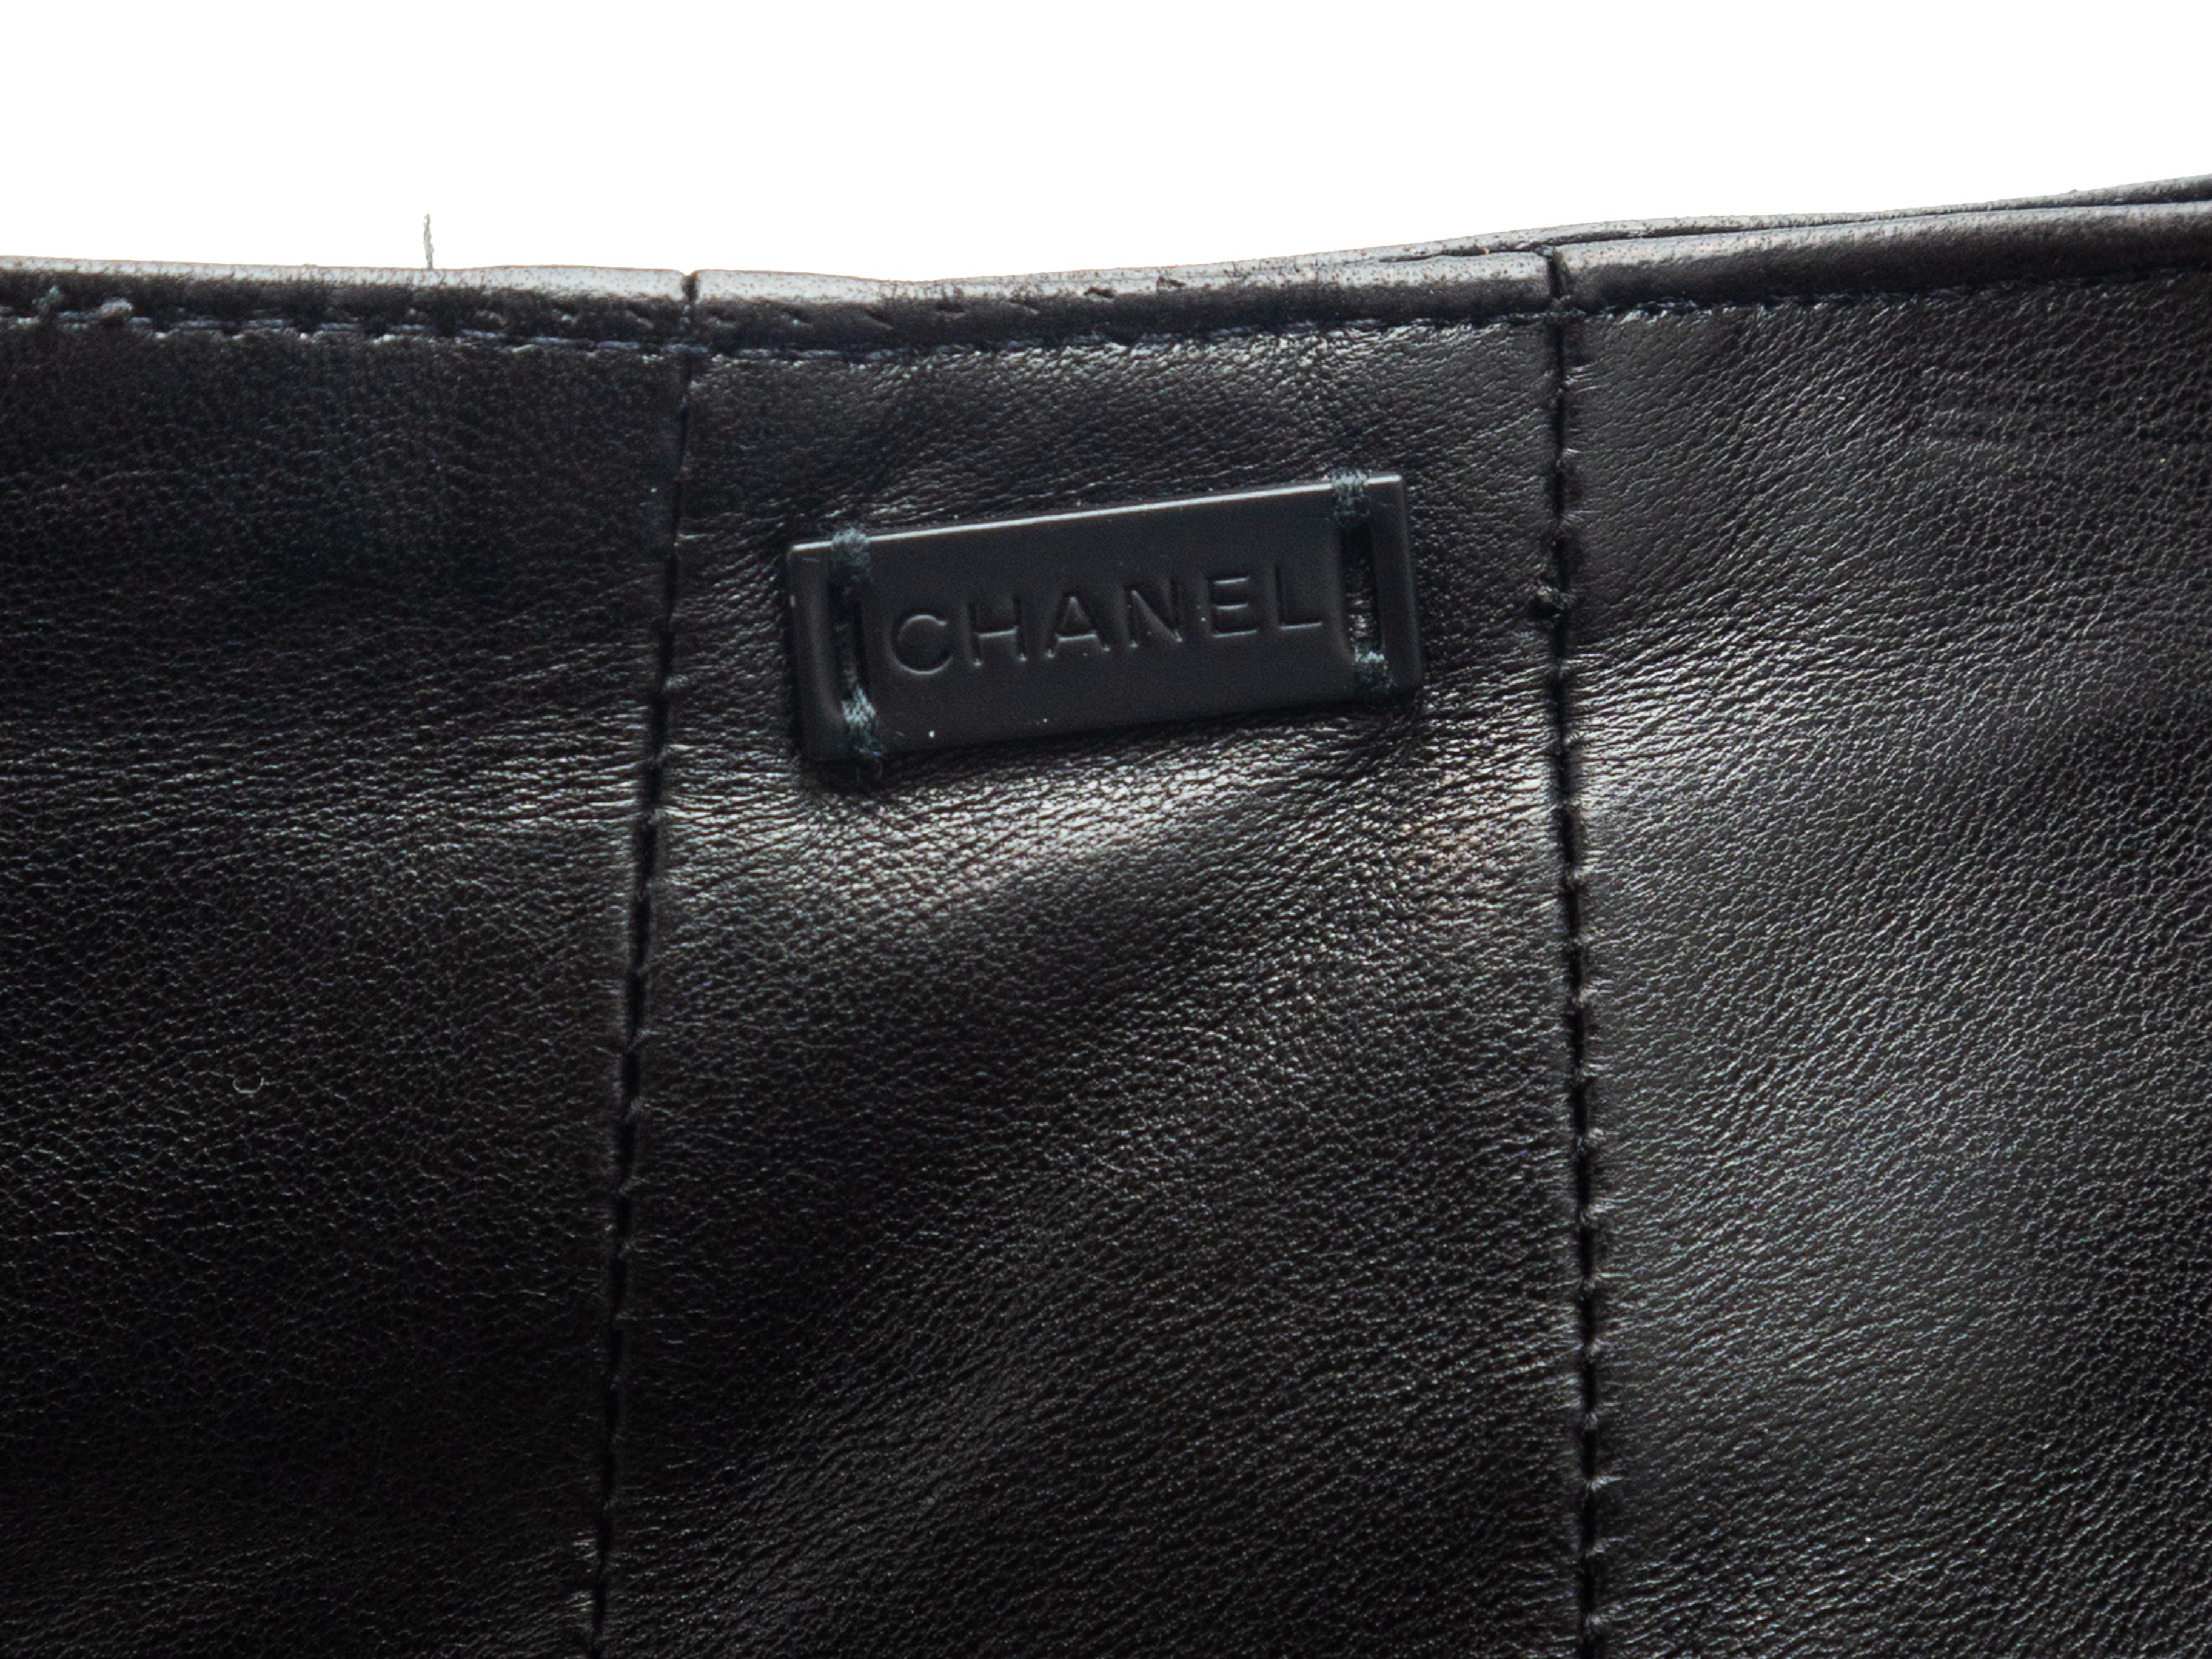 Product details: Black leather pants by Chanel. No pockets. Designer size 40. 30